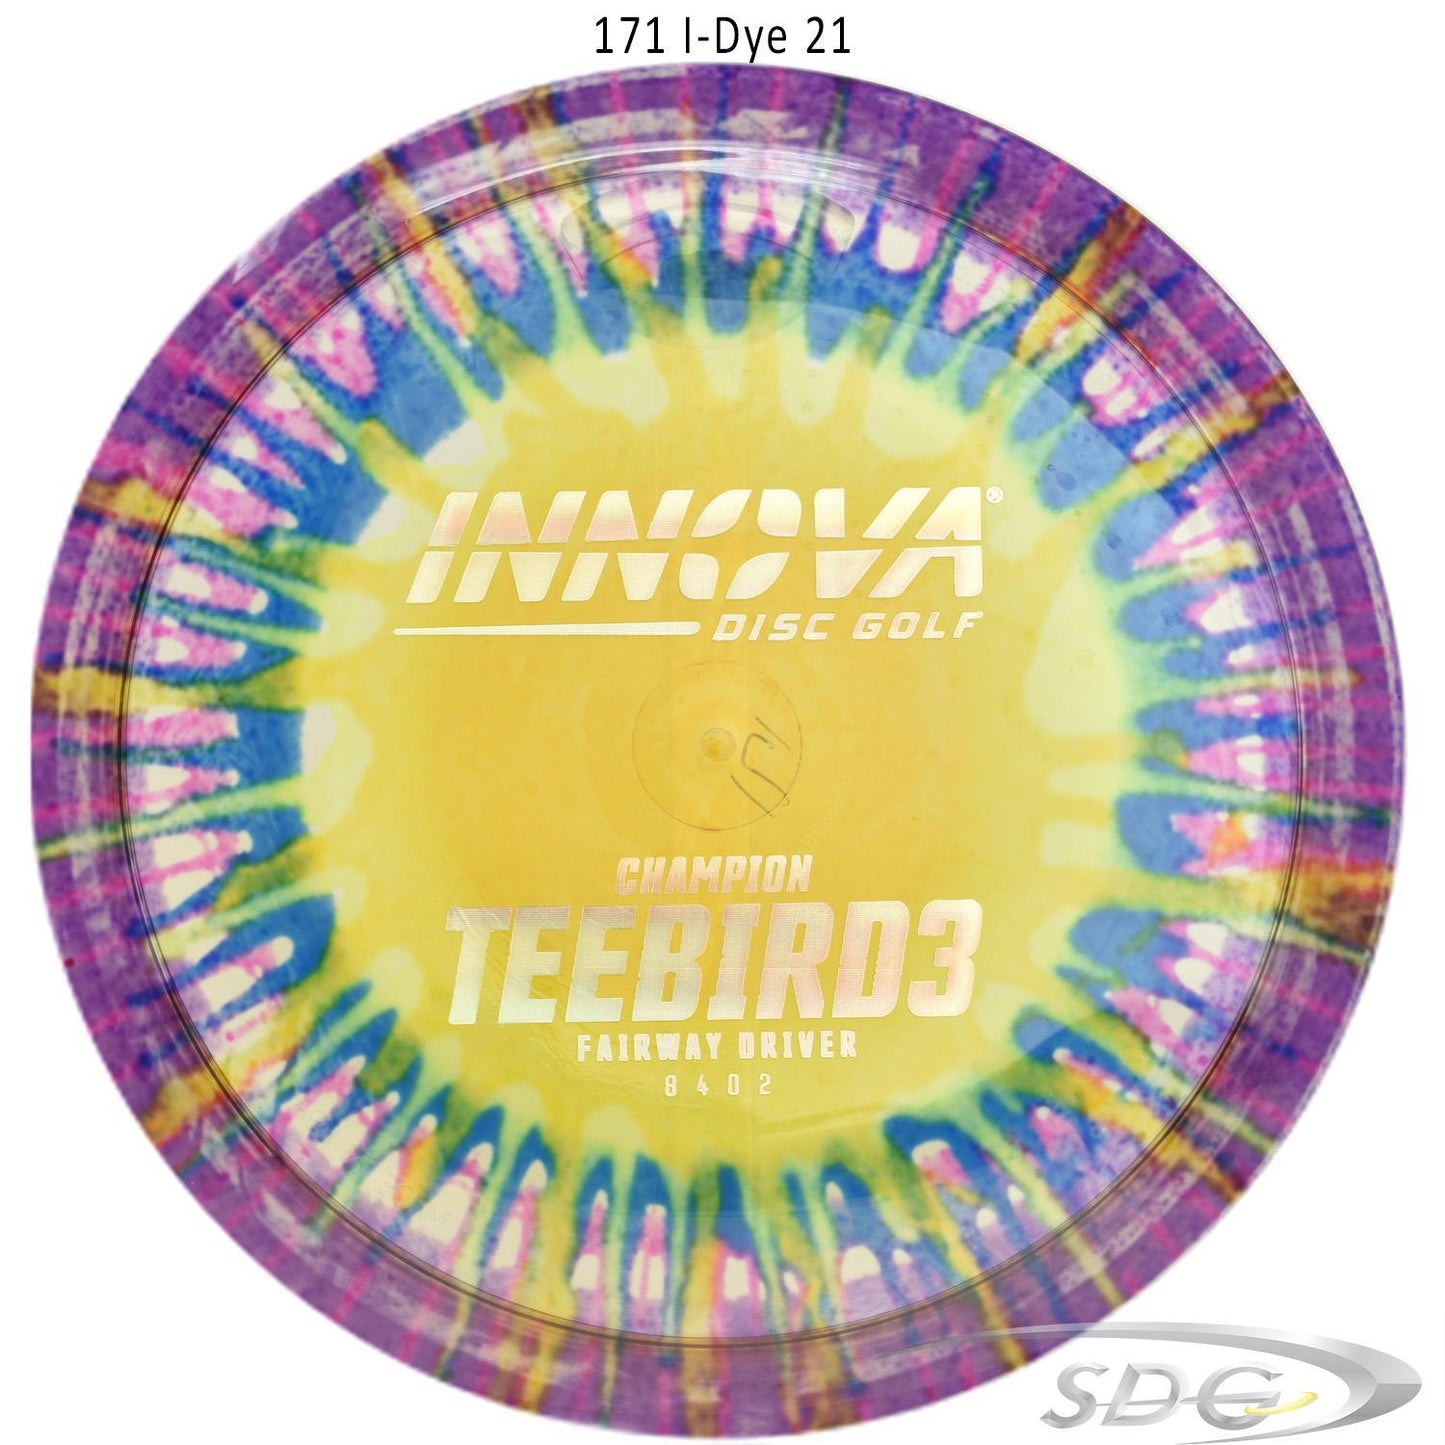 innova-champion-teebird3-i-dye-disc-golf-fairway-driver 171 I-Dye 21 